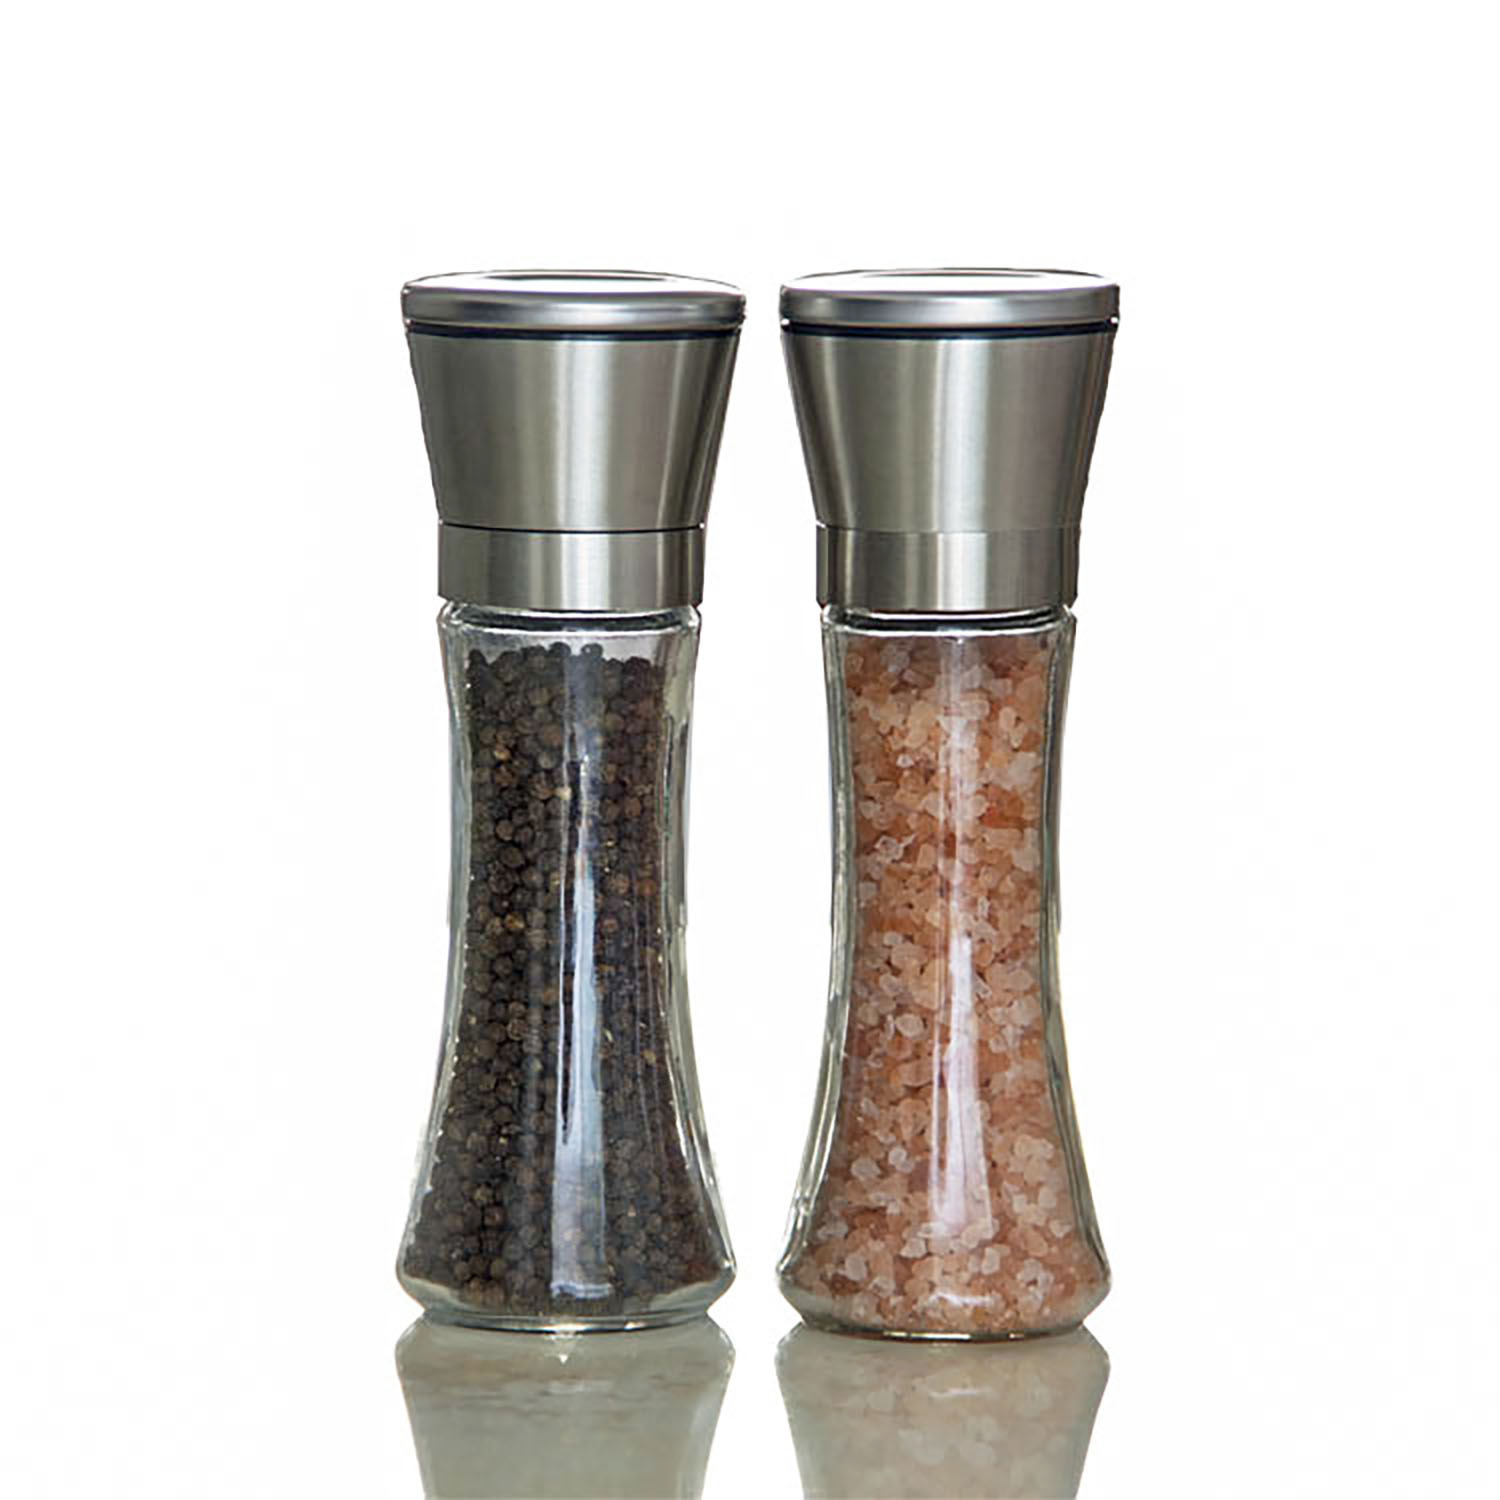 Beautiful Stainless Steel Salt and Pepper Grinder Set of 2 - Pepper Mi –  Benicci